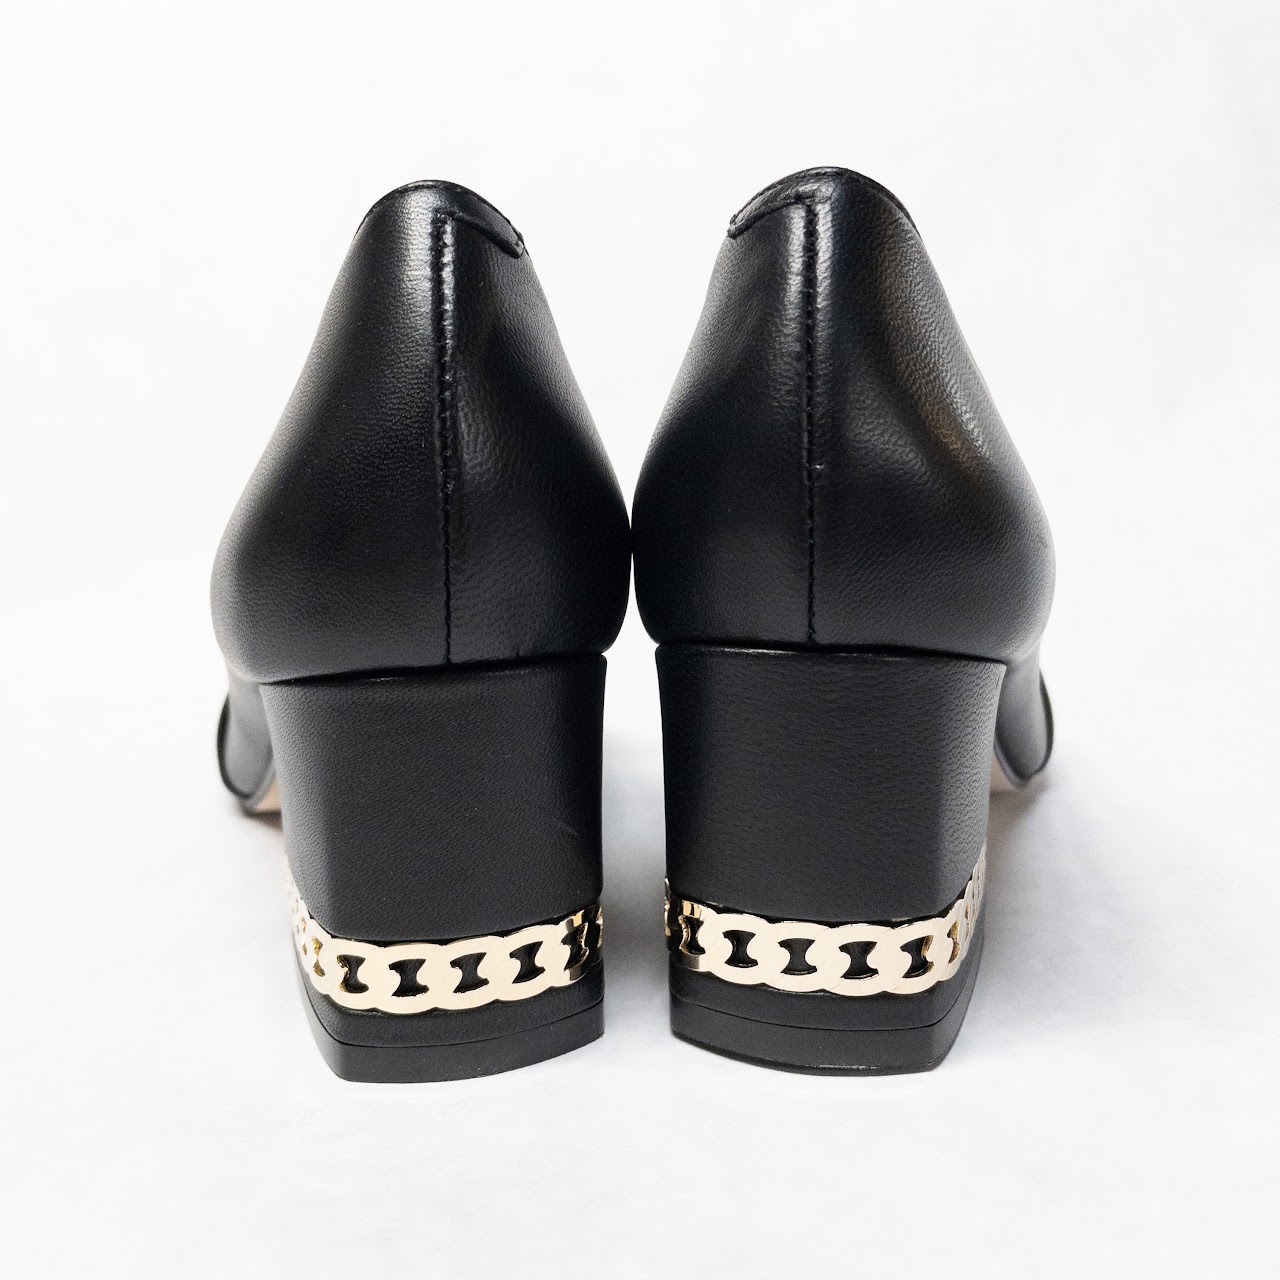 Tamara Mellon Black Leather Block Heel Pumps